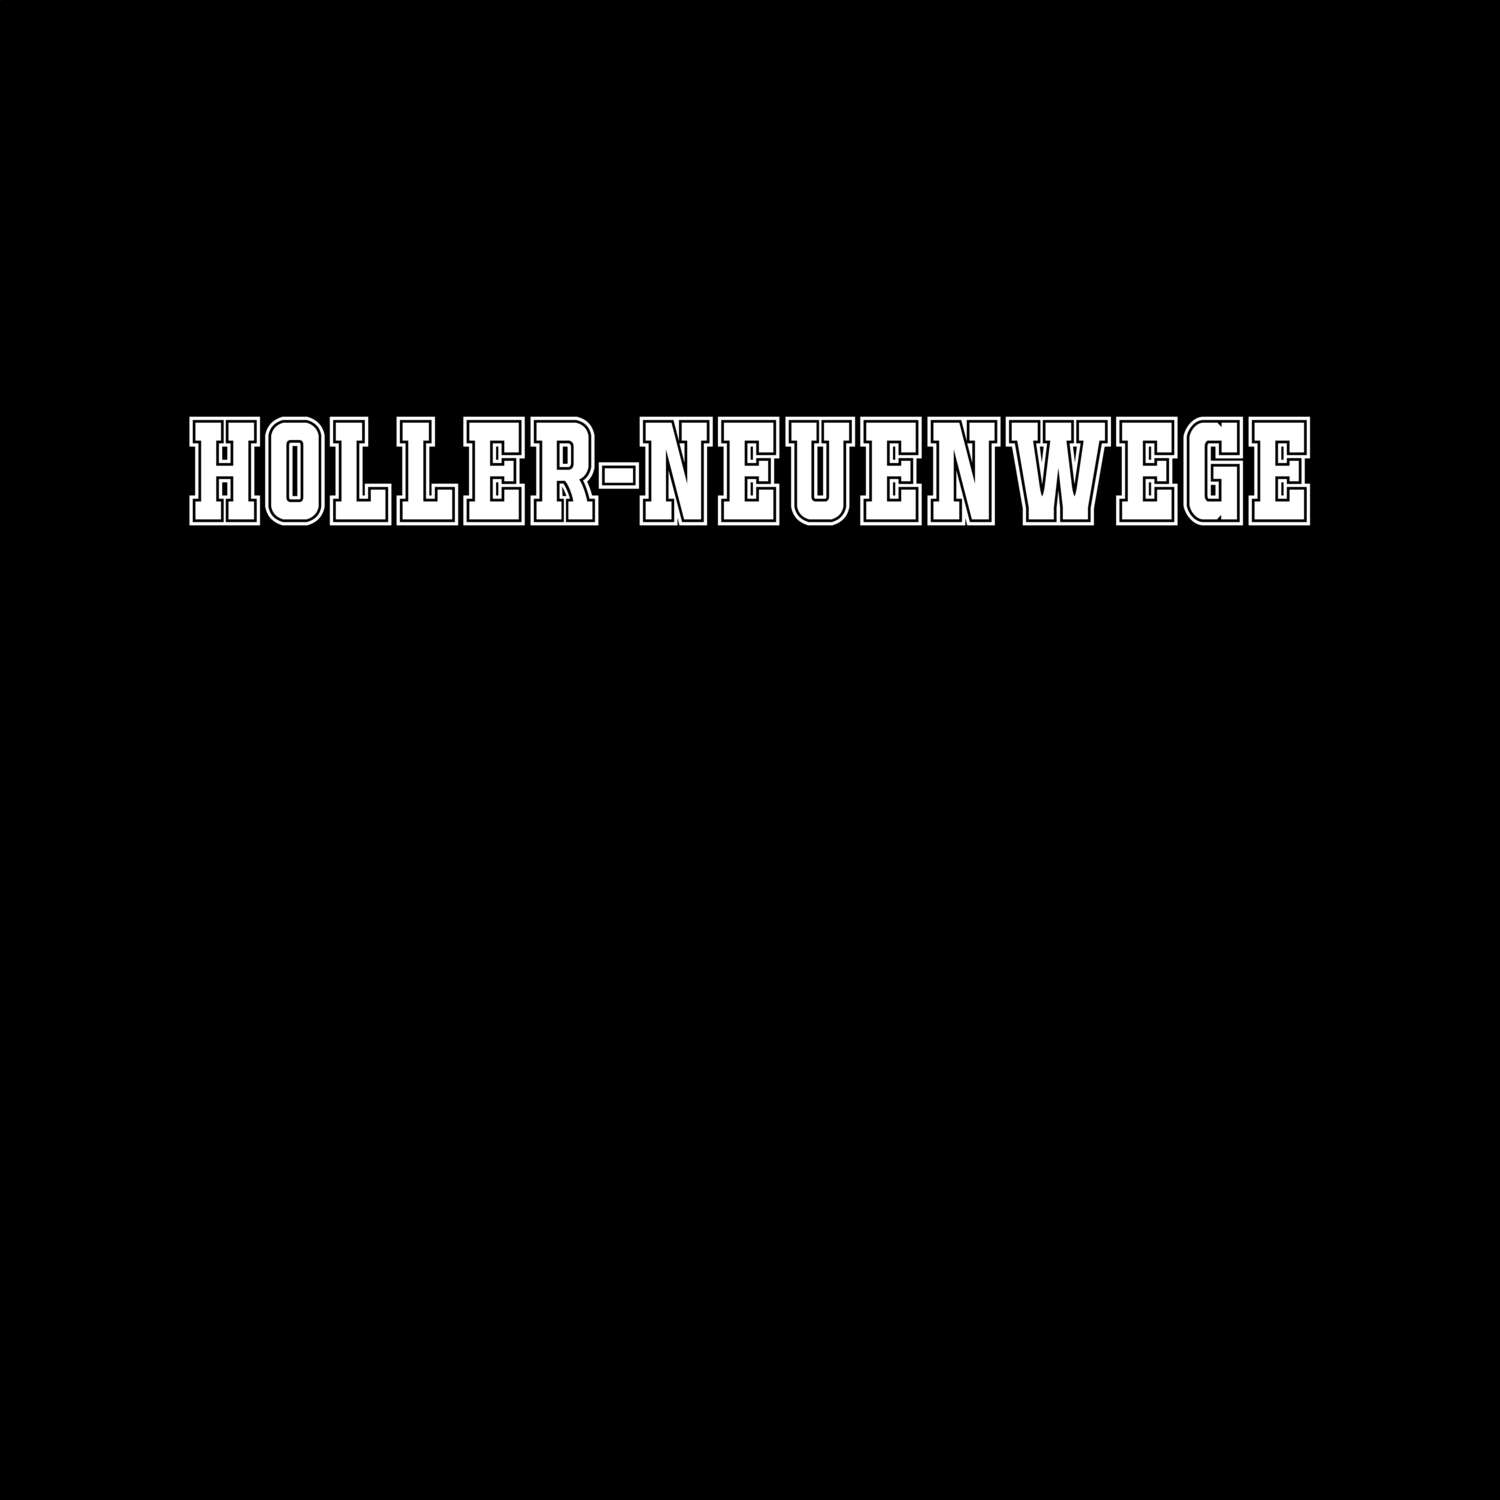 Holler-Neuenwege T-Shirt »Classic«